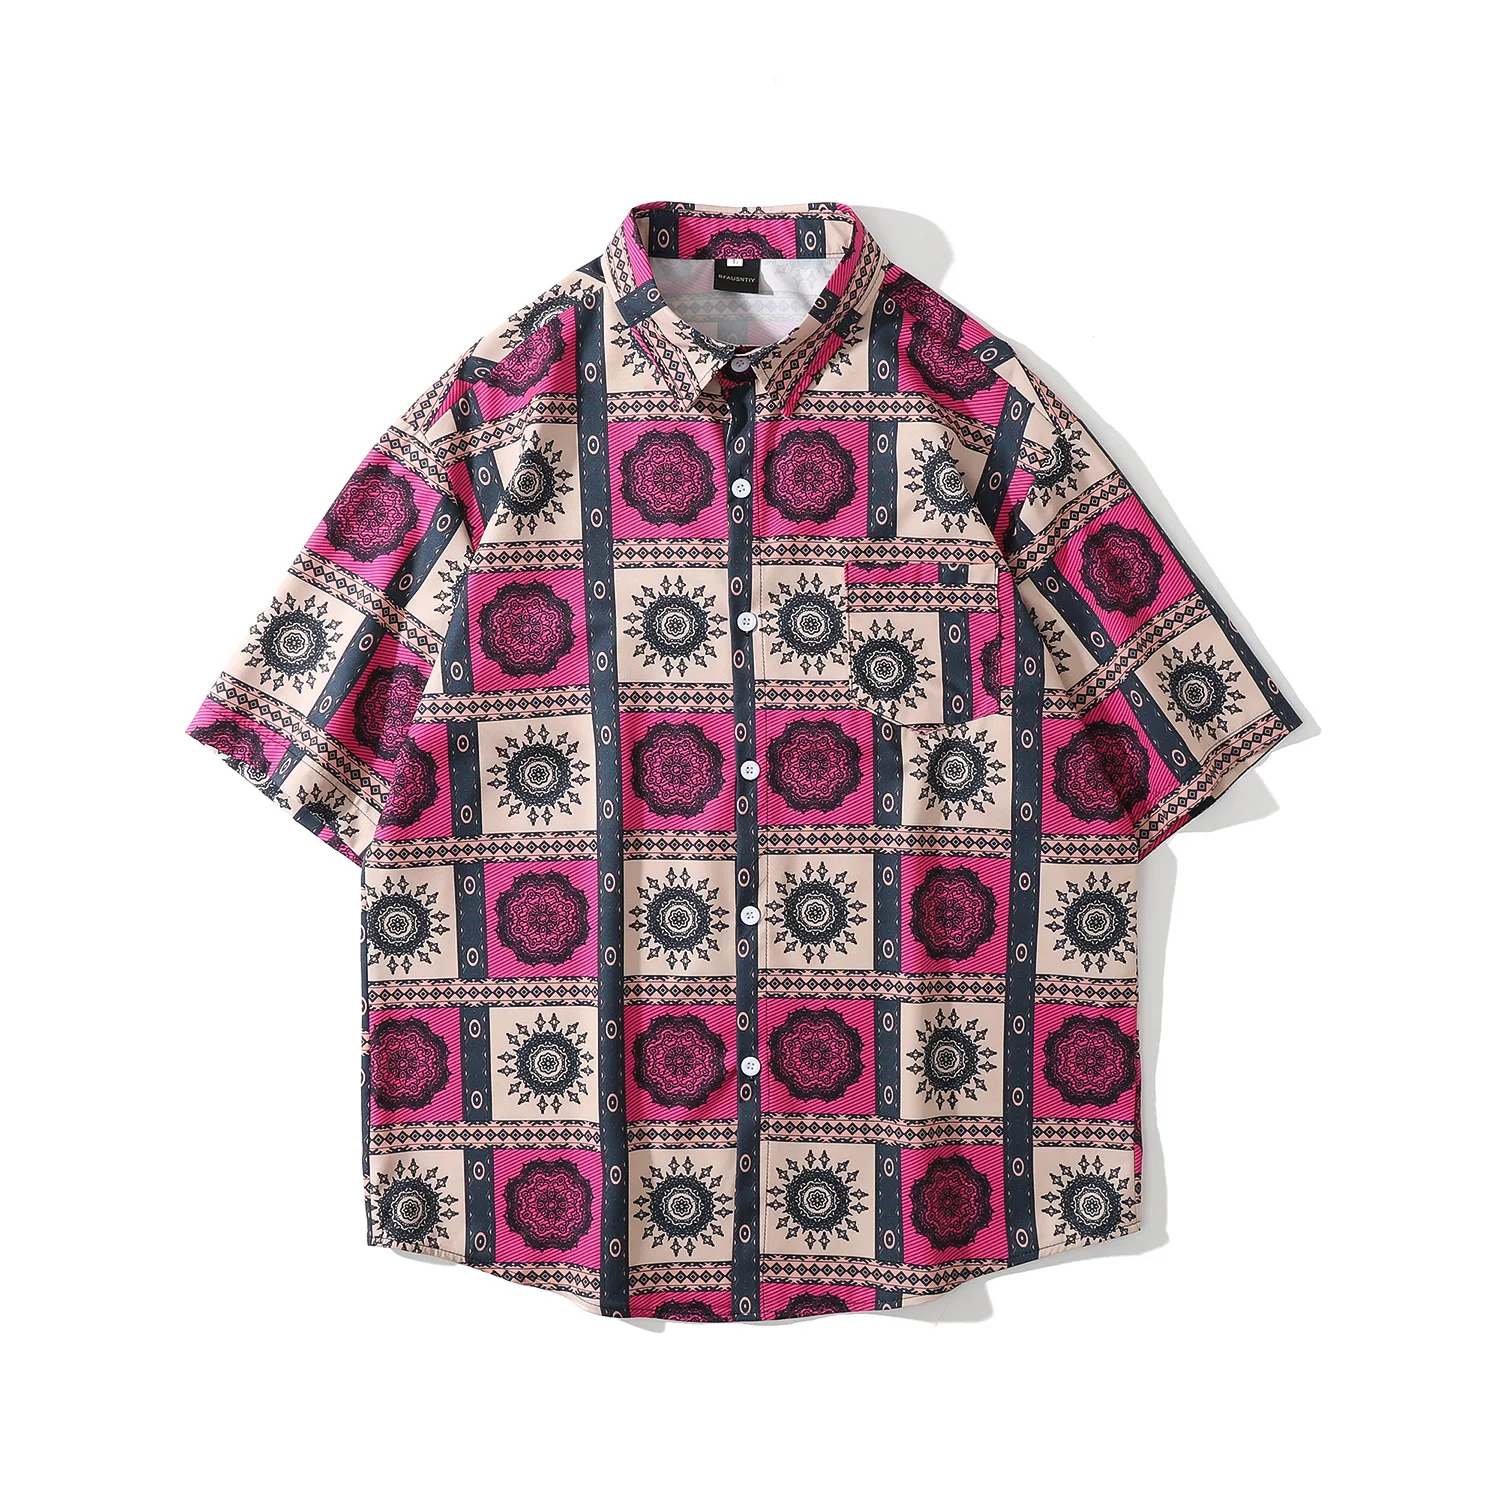 

Bianfeng Mens Hawaiian Shirt Pattern Print Button Down Beach Shirts Short Sleeve Summer Casual Top